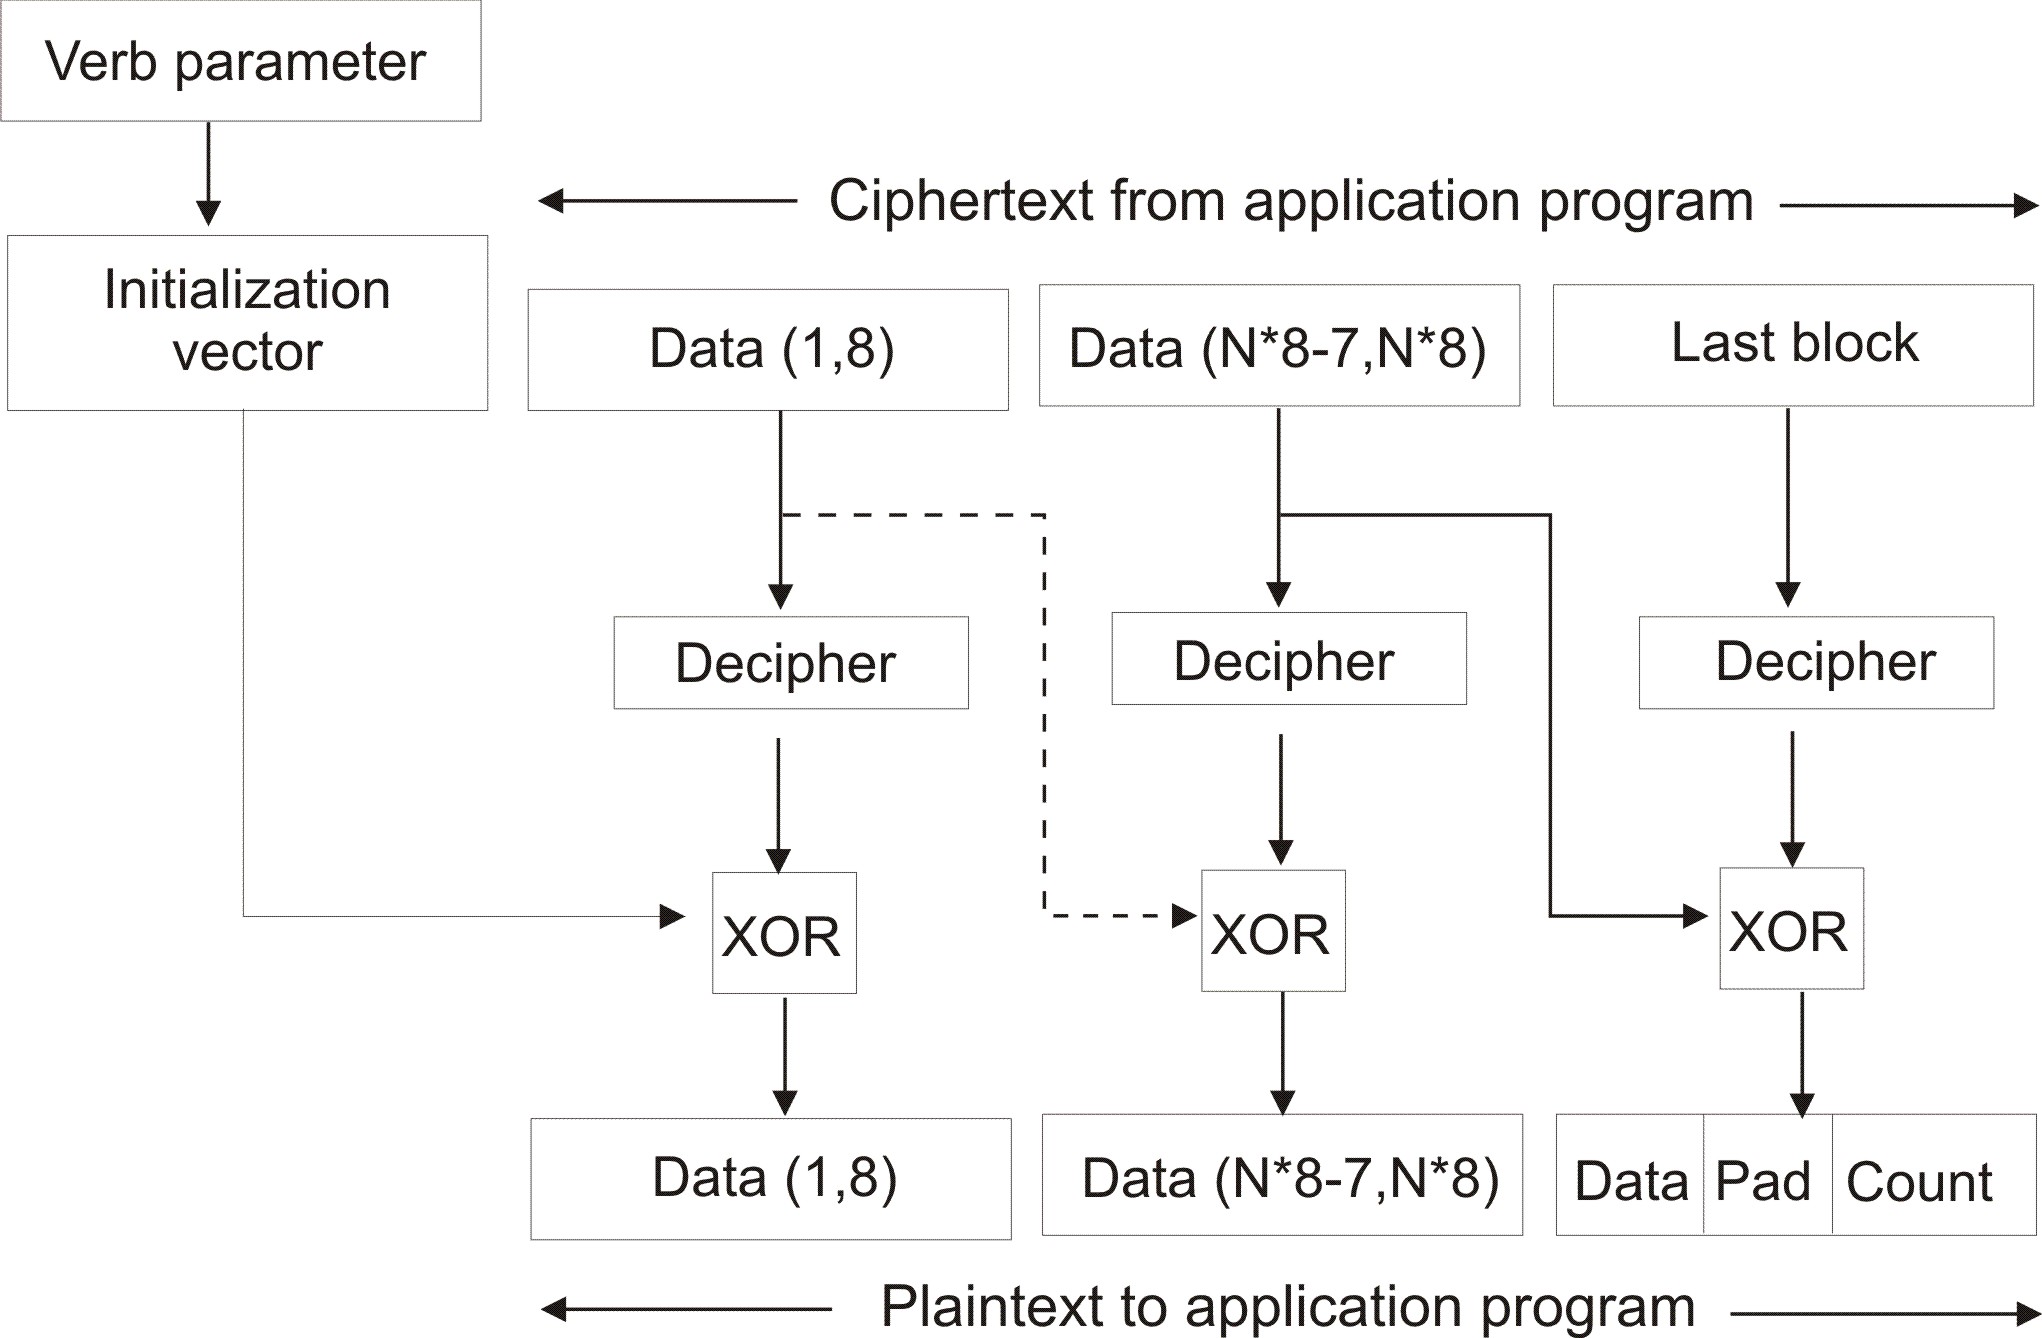 Deciphering using the ANSI X9.23 method